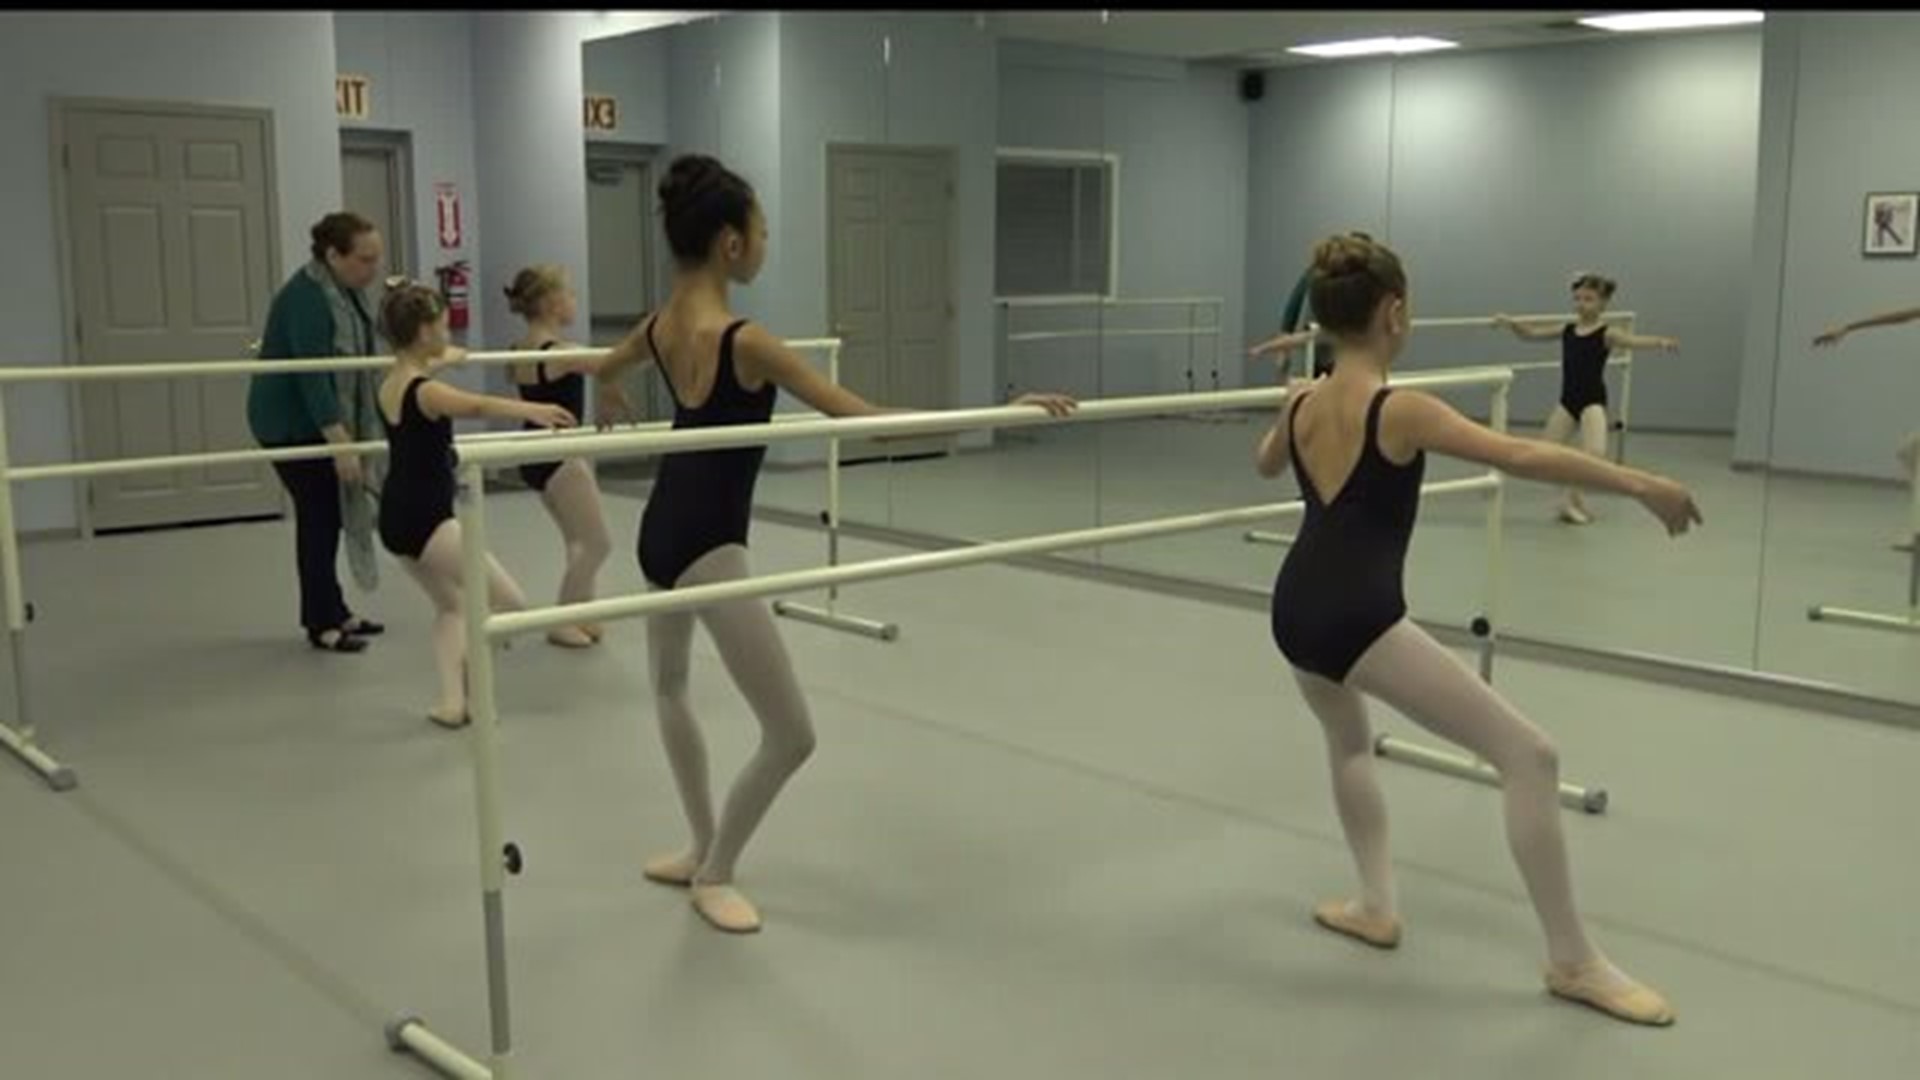 Pennsylvania Ballet Academy kicks off their dance instruction